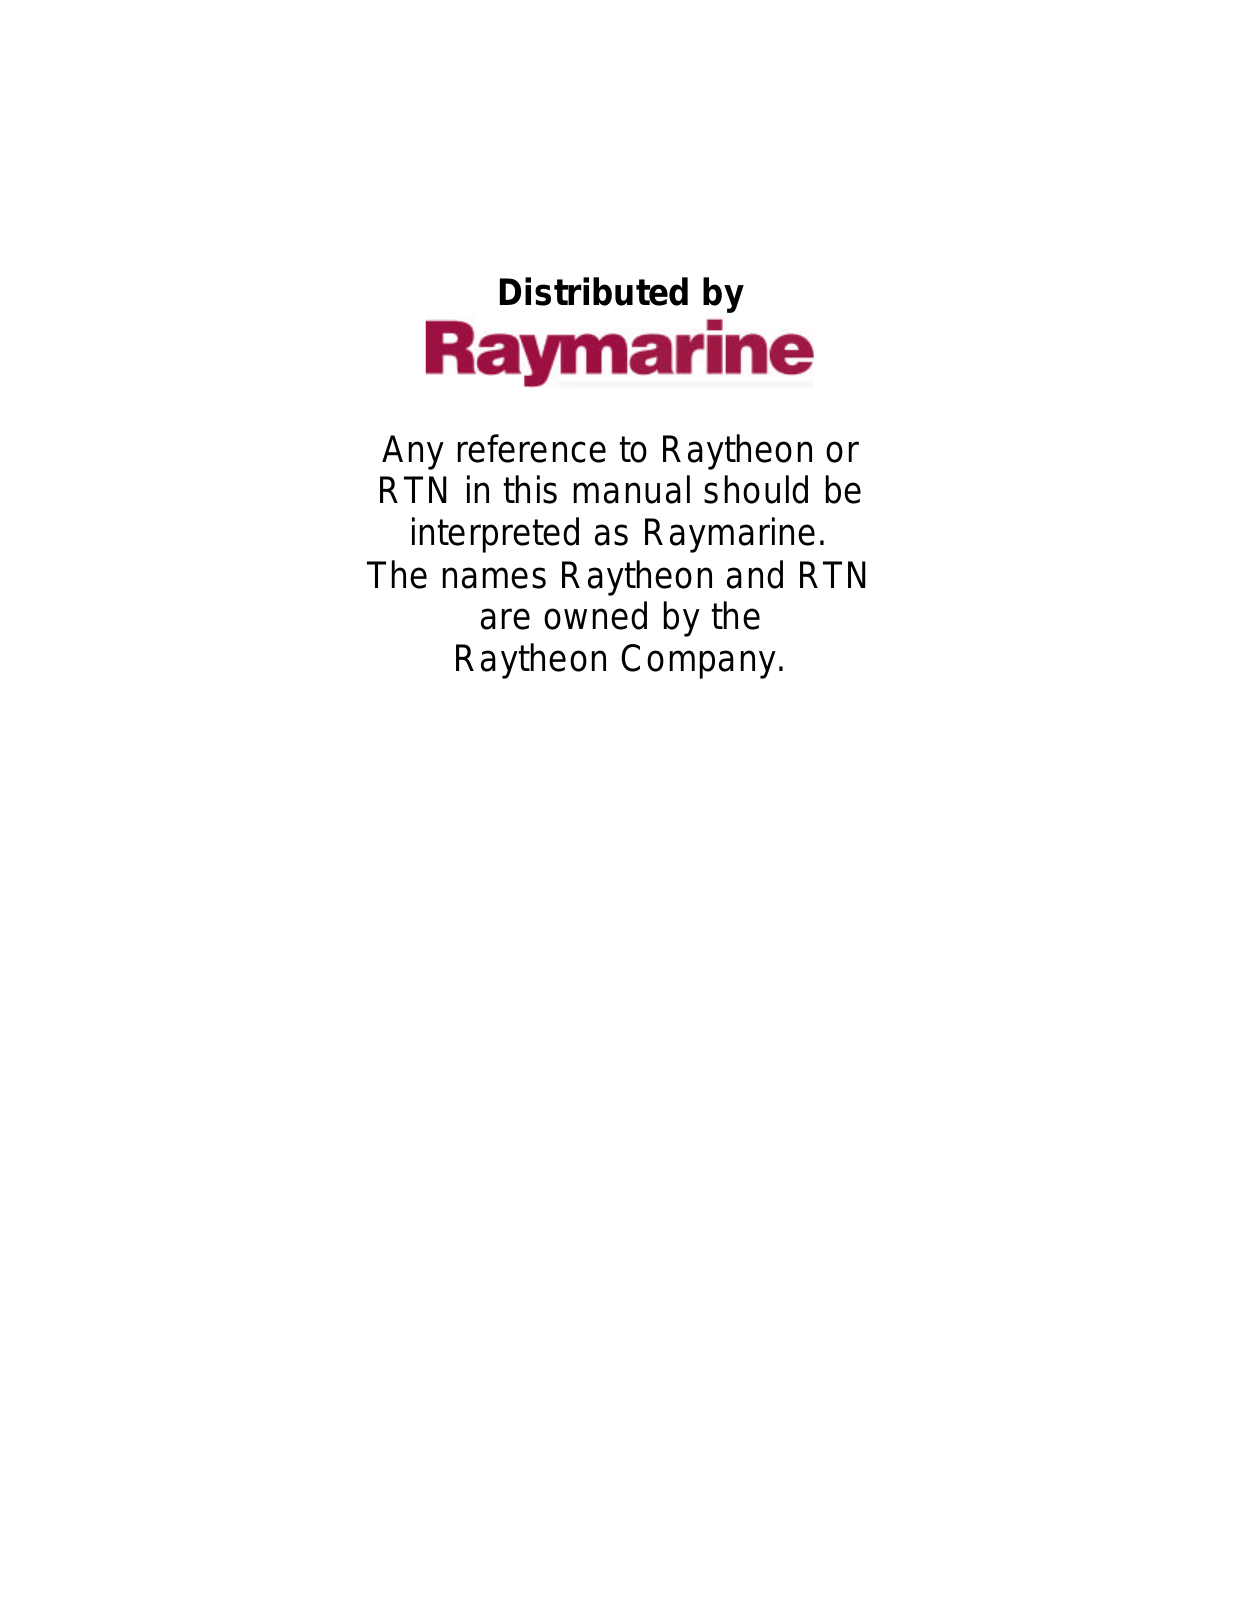 Raymarine APELCO 510 Manual